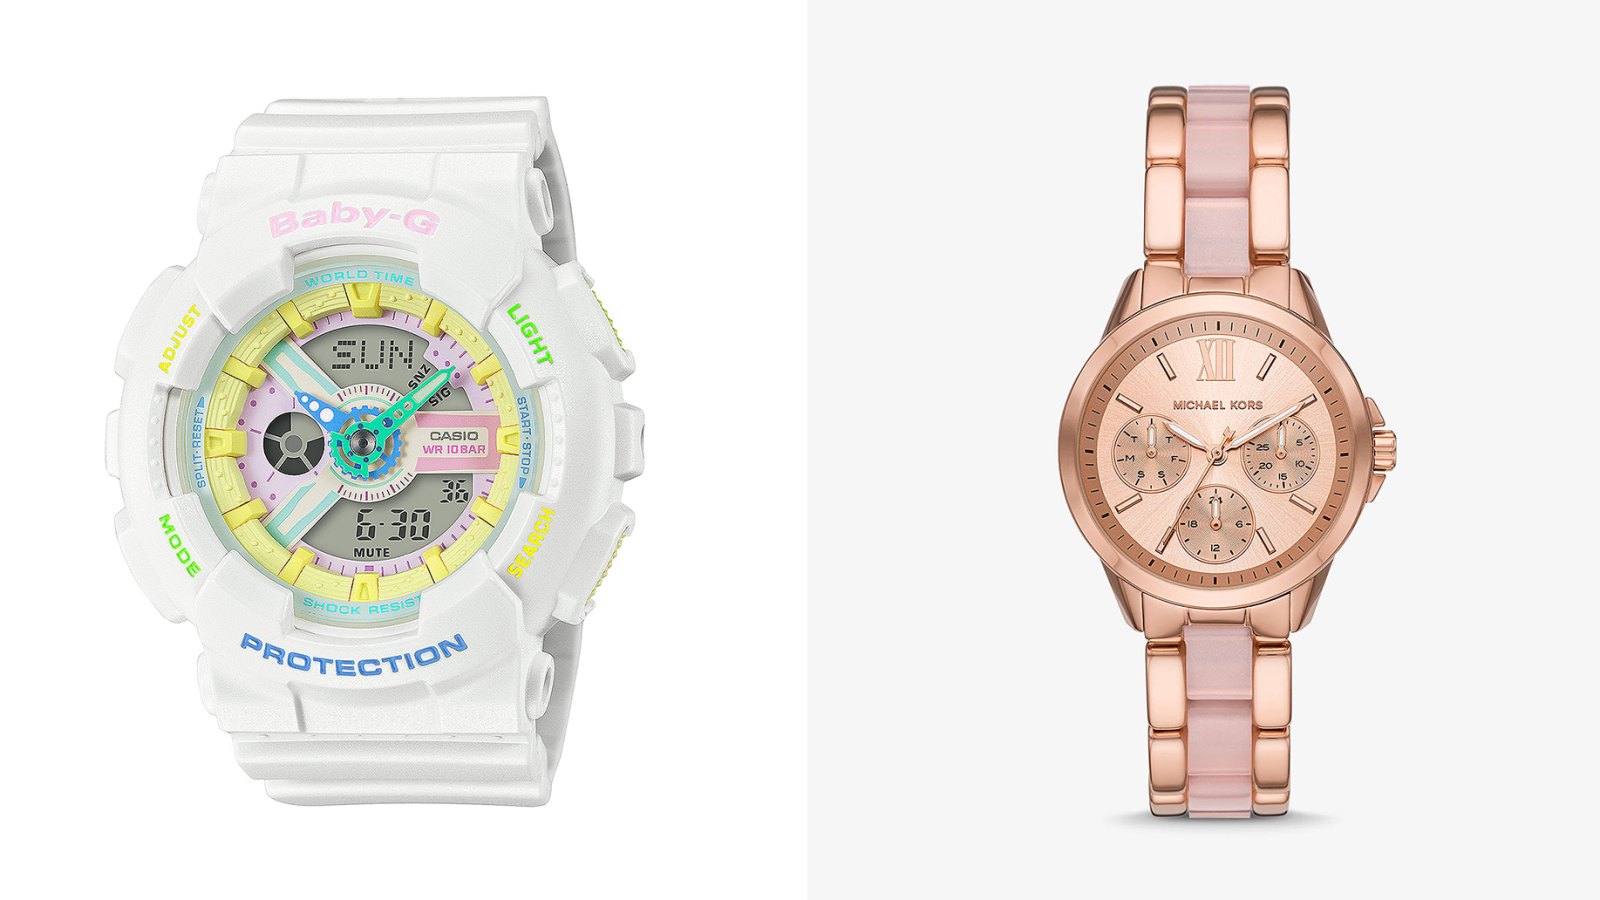 Tory Burch Women's Wrist Watch - White - Watches